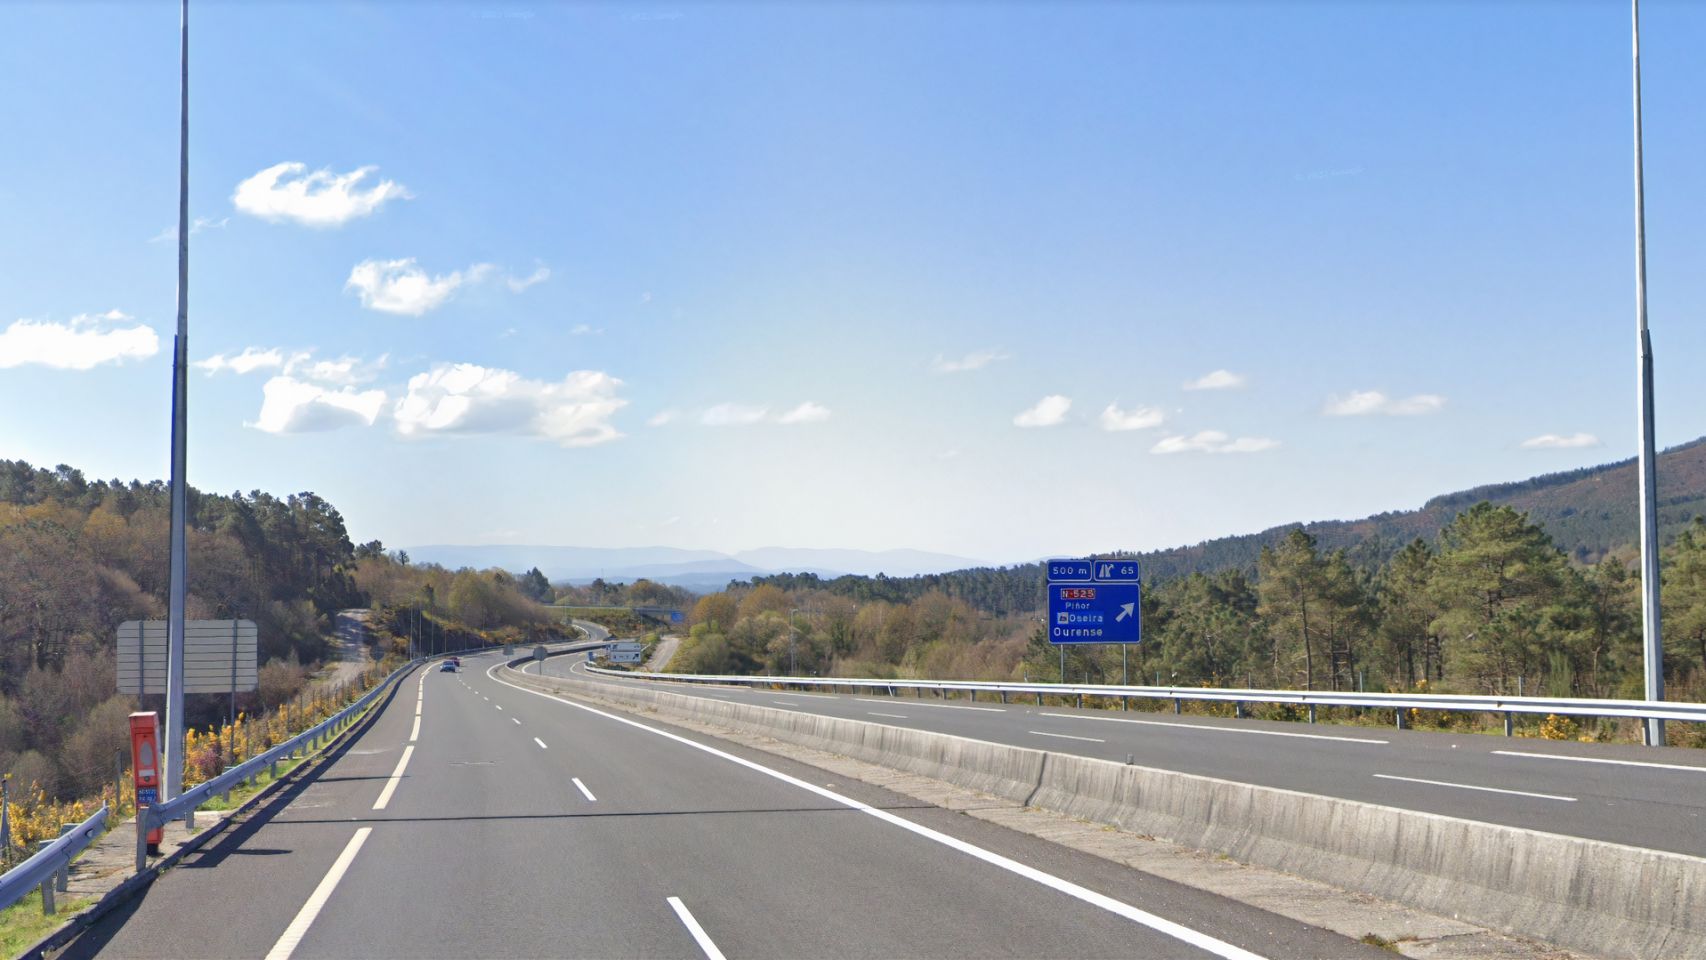 Carretera AG-53 a su paso por la provincia de Pontevedra.